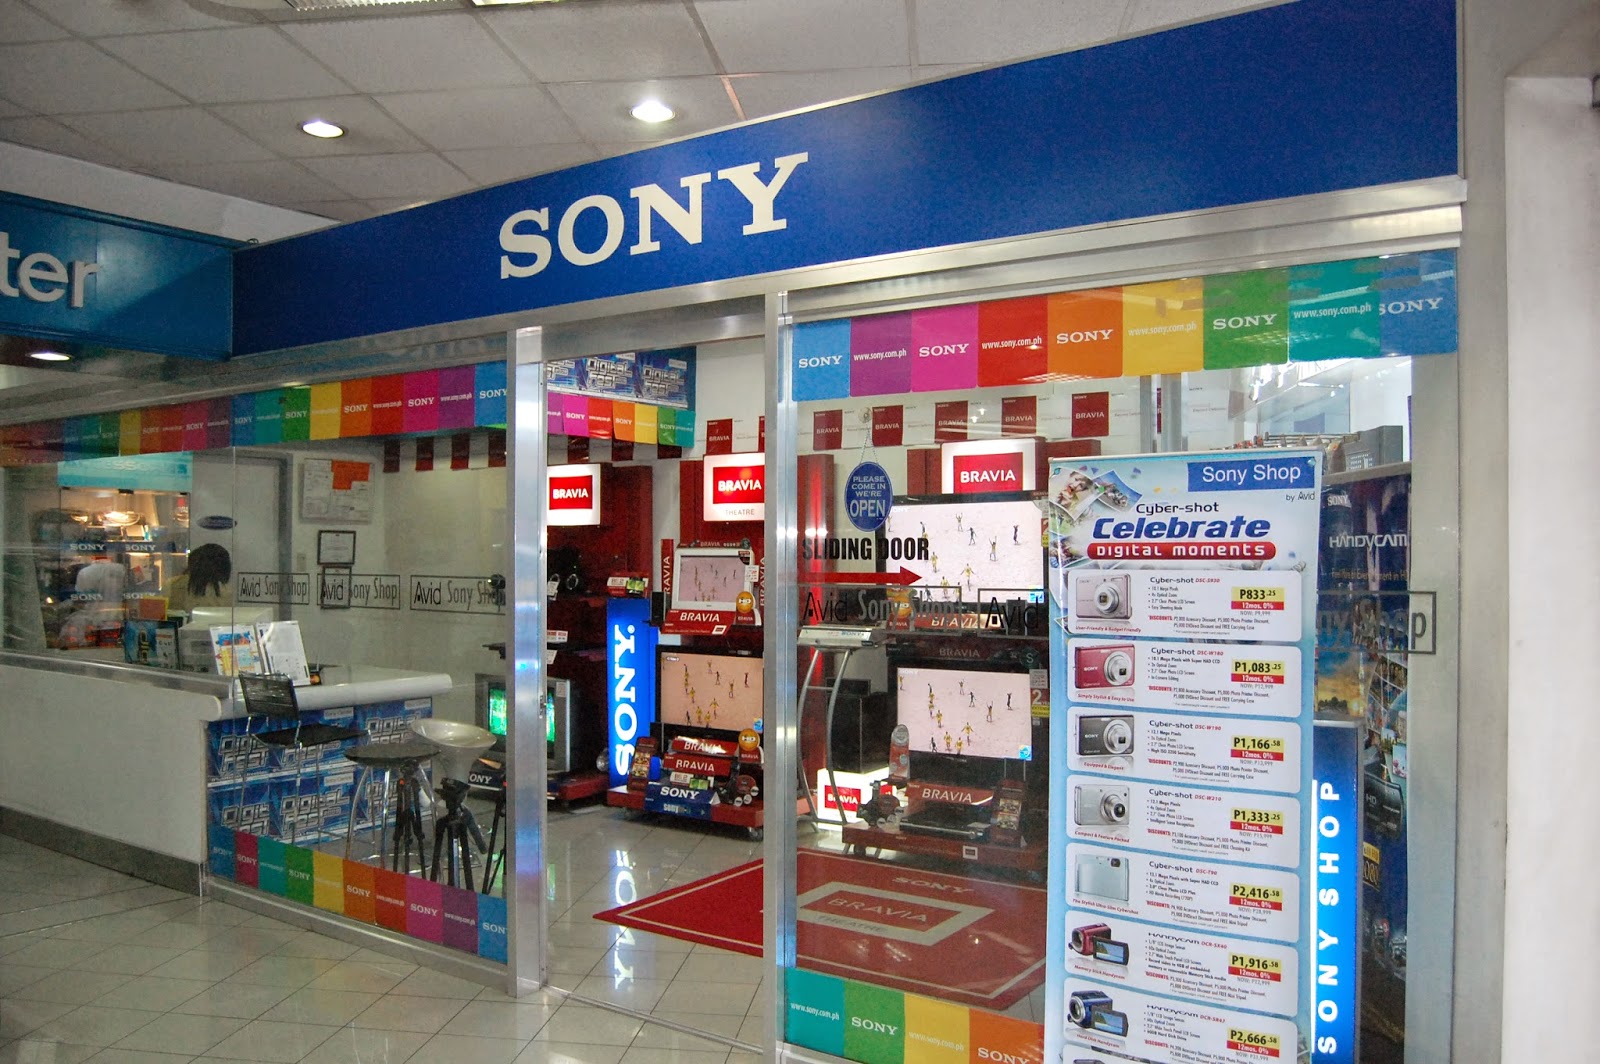 Sony Service Centers in India: Sony Service Center in Delhi